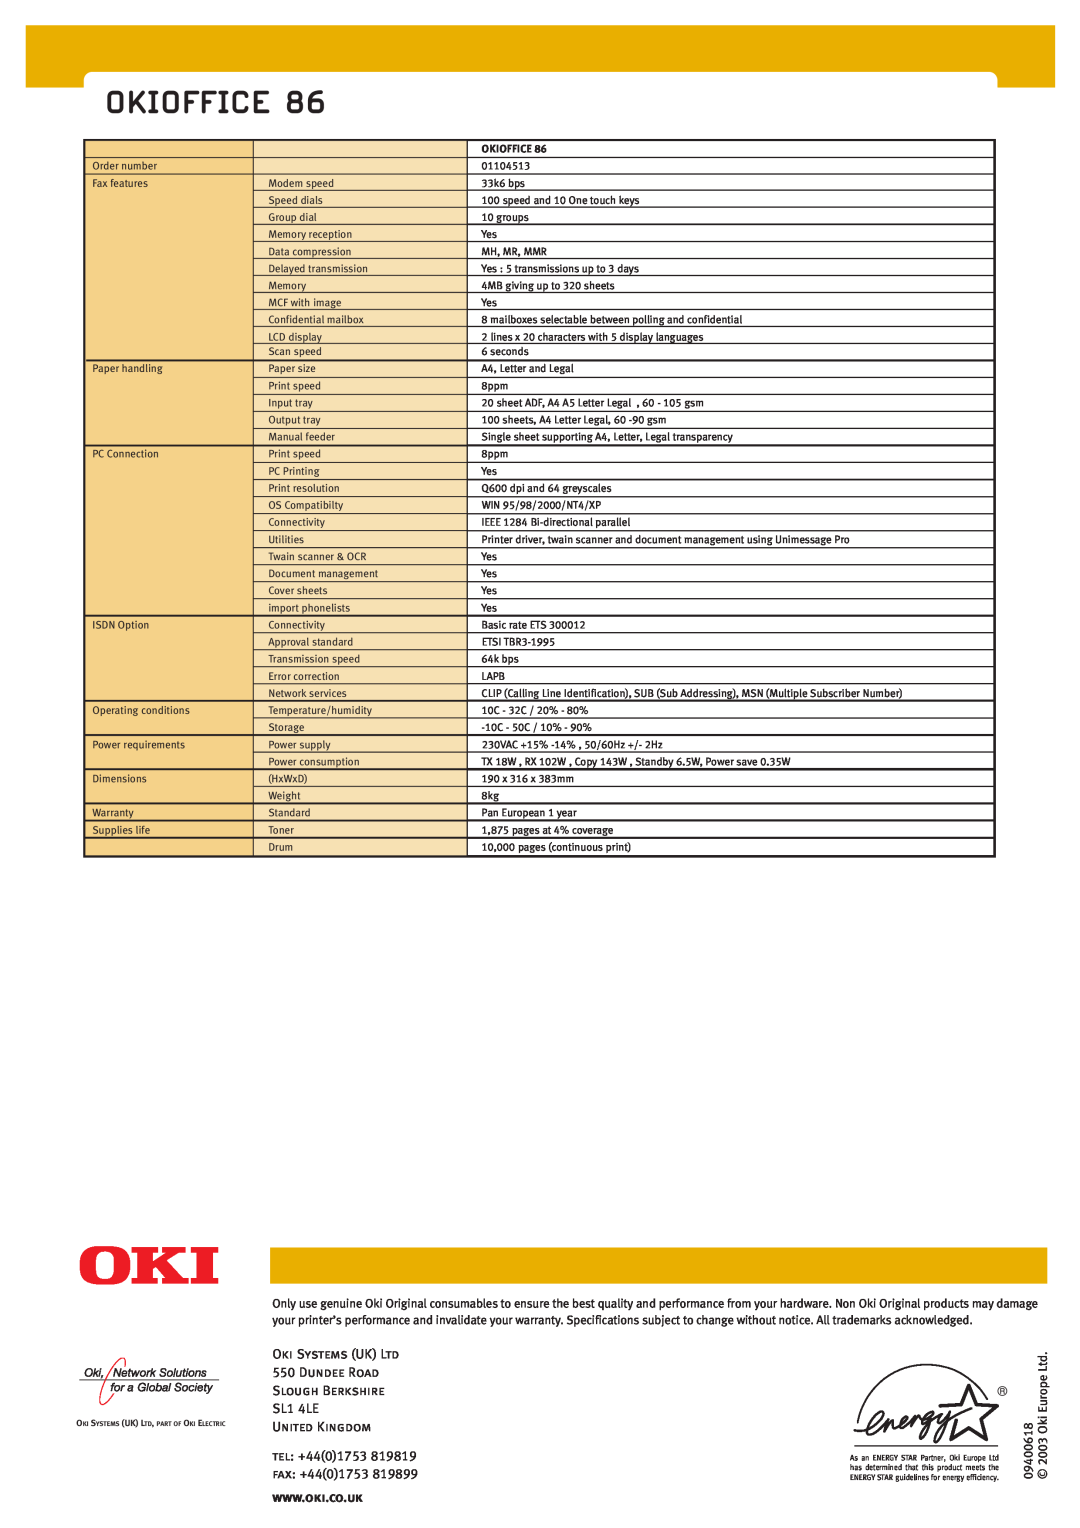 Oki 86 manual Okioffice, Dundee Road Slough Berkshire SL1 4LE United Kingdom tel +4401753, fax +4401753 